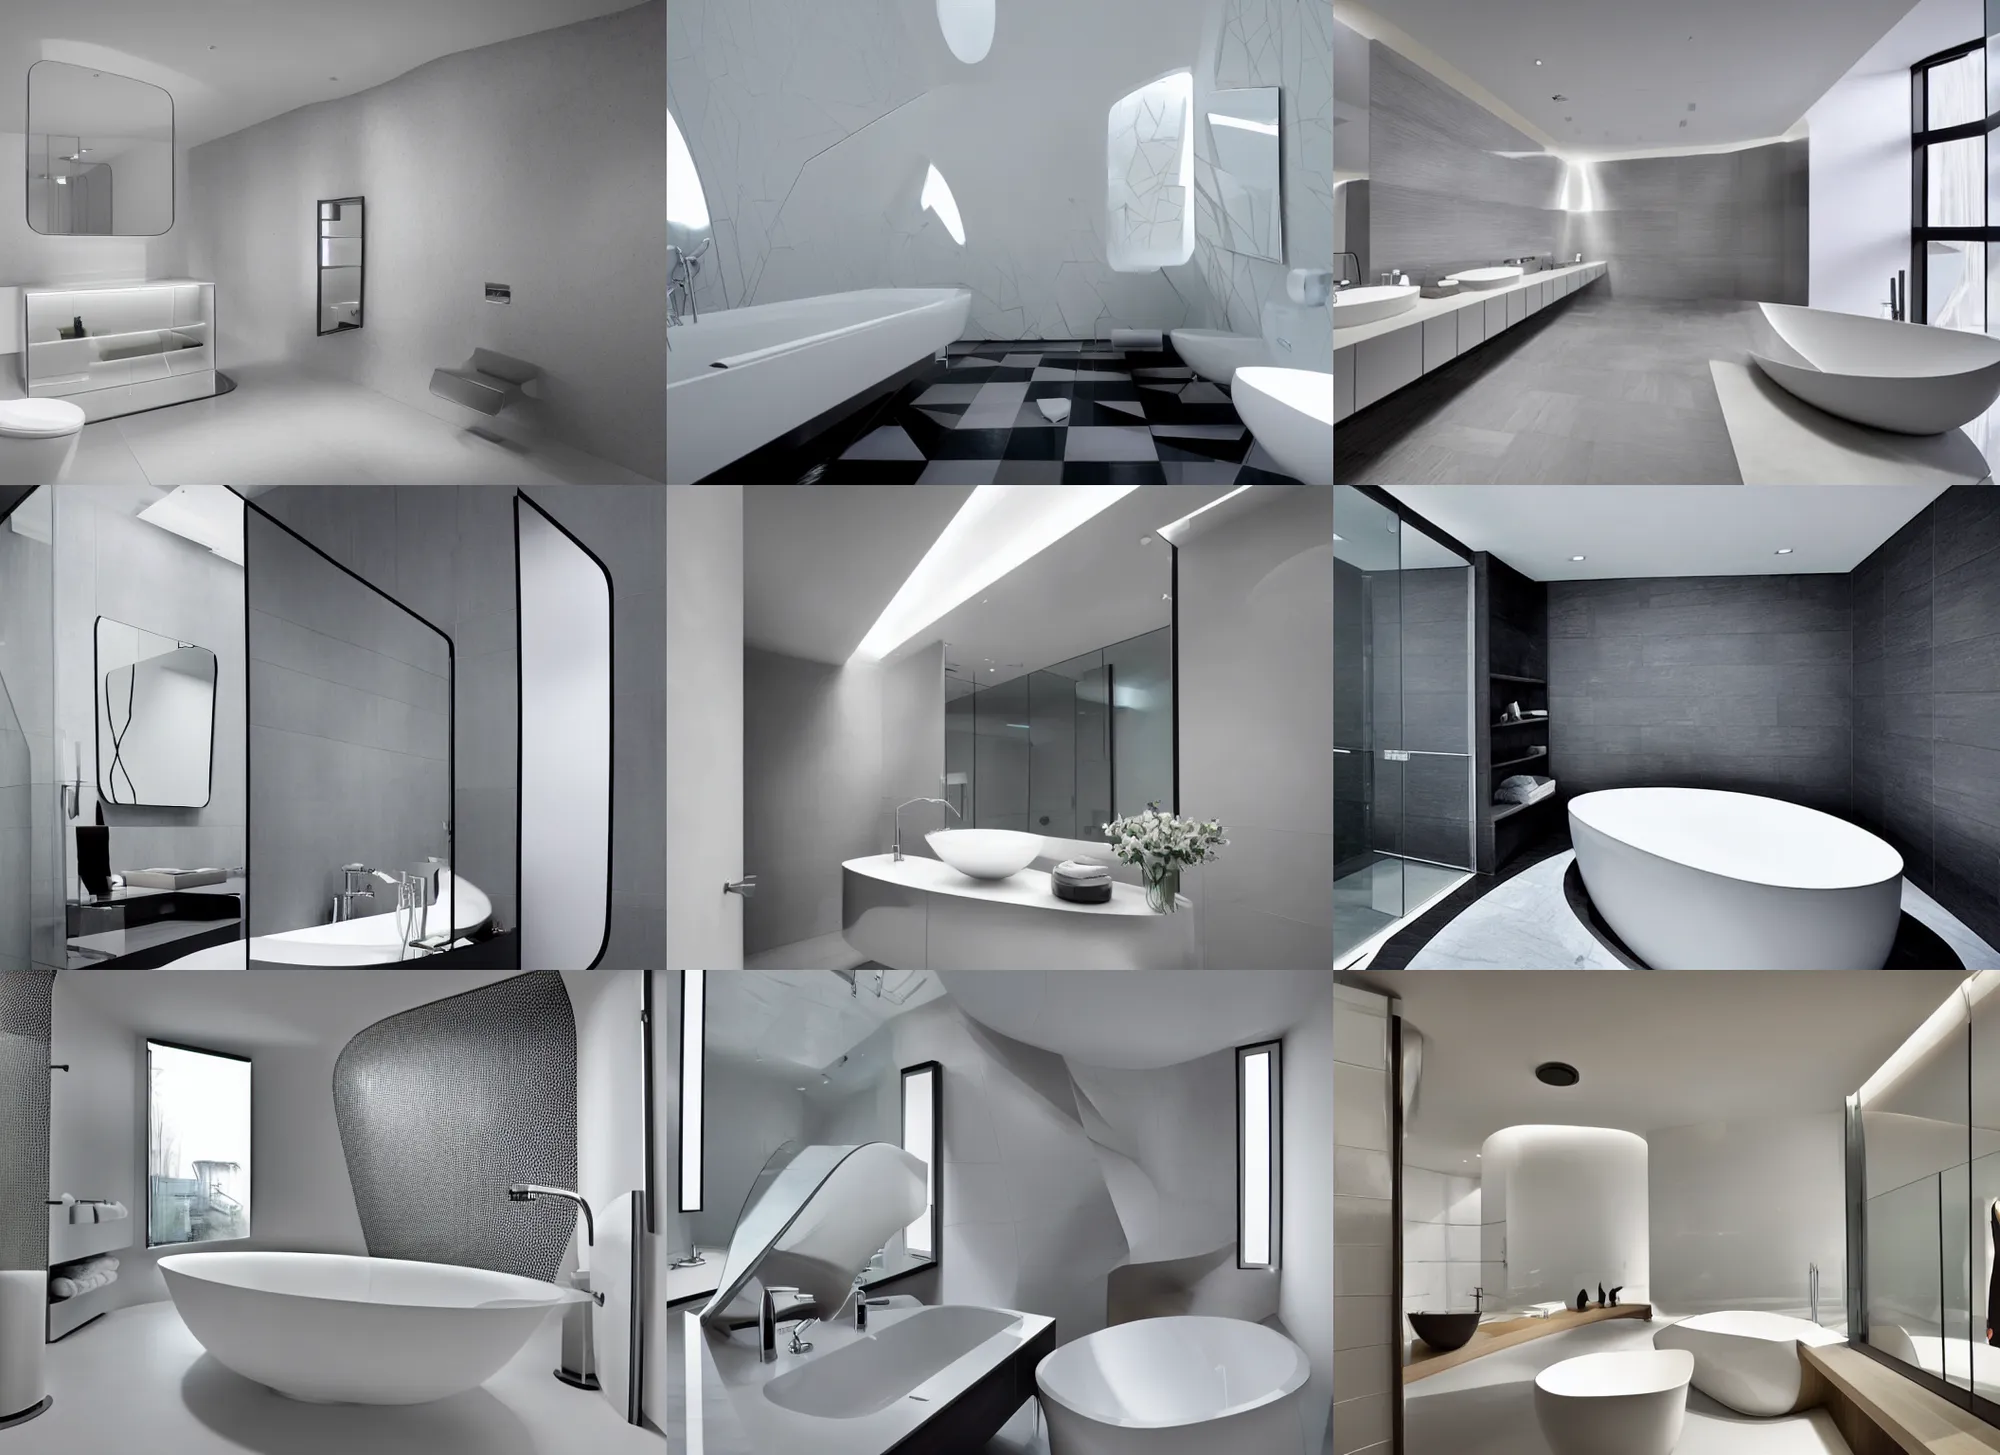 Prompt: a modern bathroom designed by zaha hadid